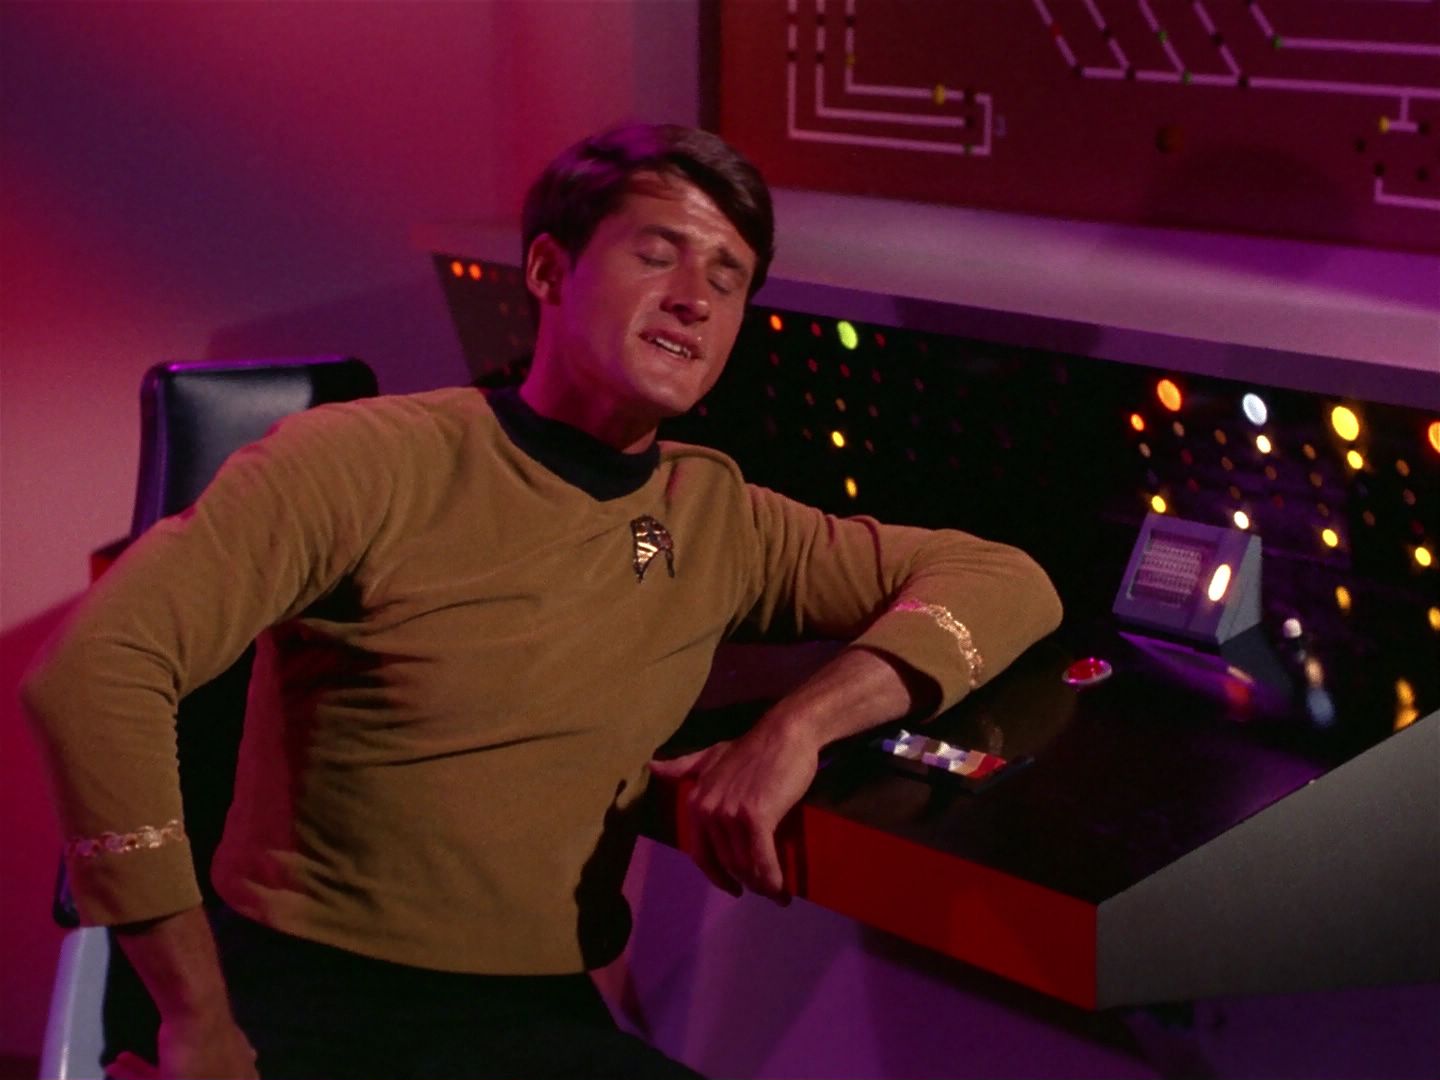 Star Trek The Original Series Rewatch: The Naked Time 